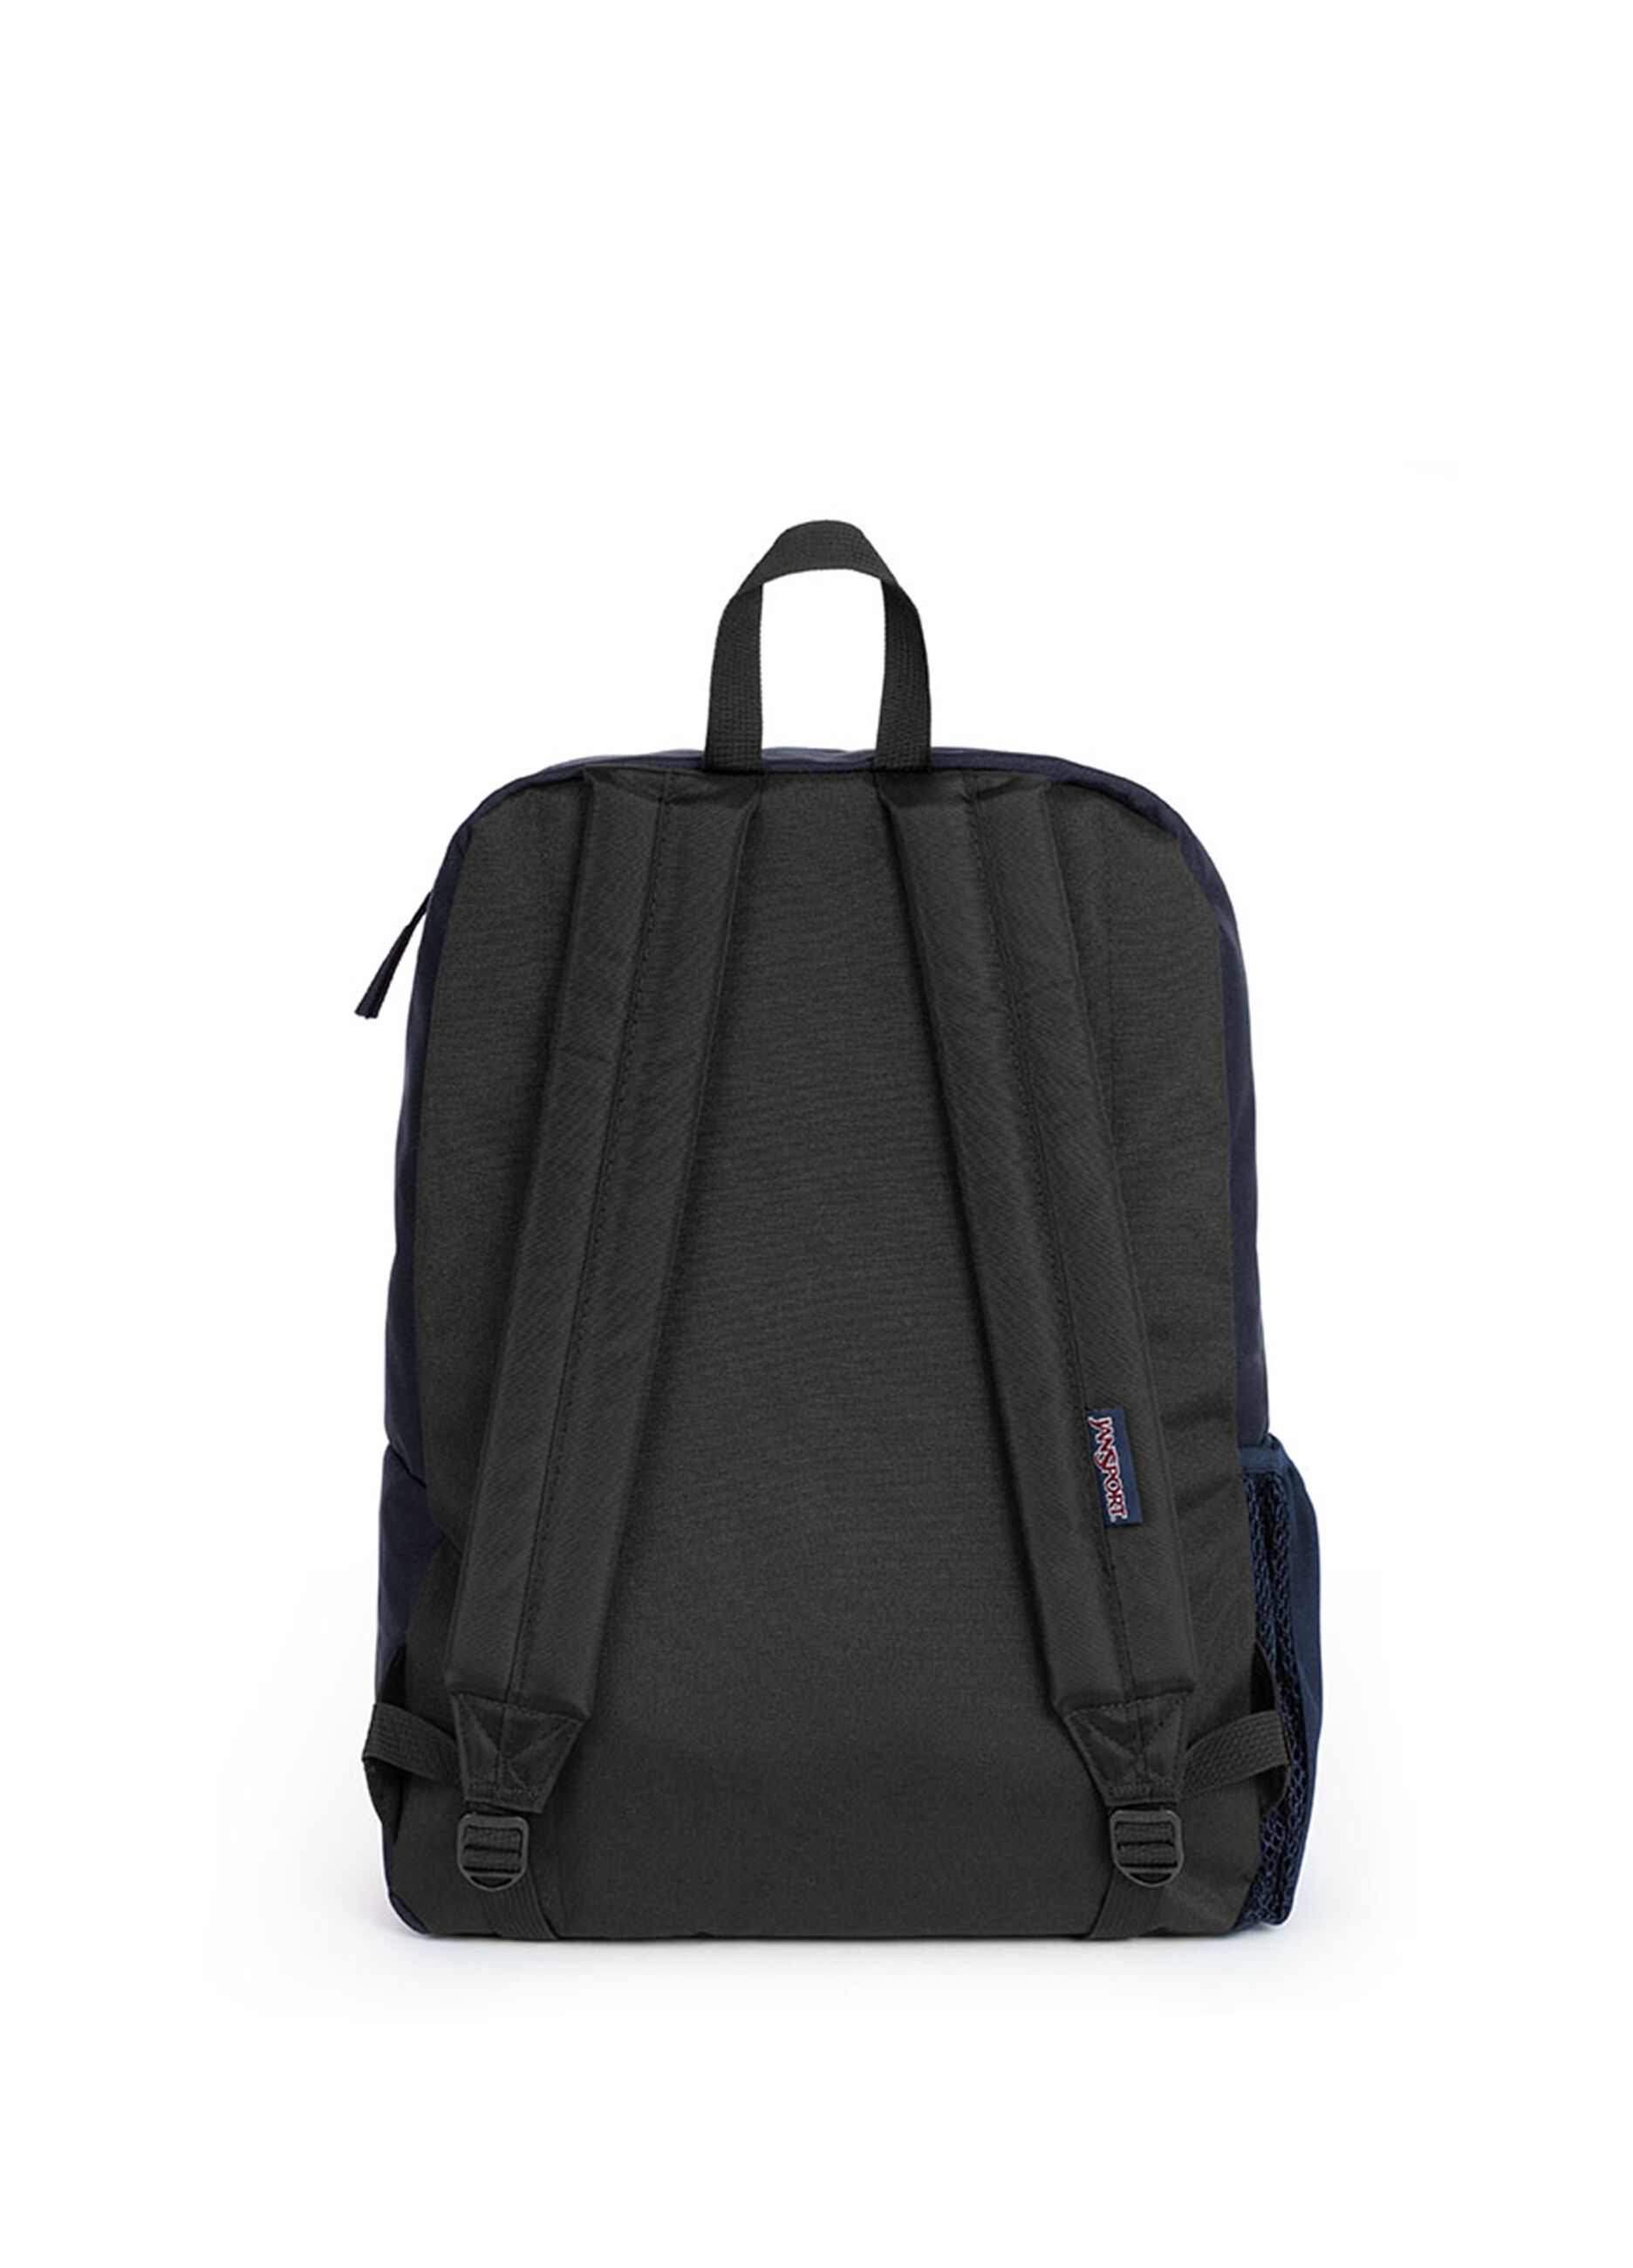 Cross Town backpack